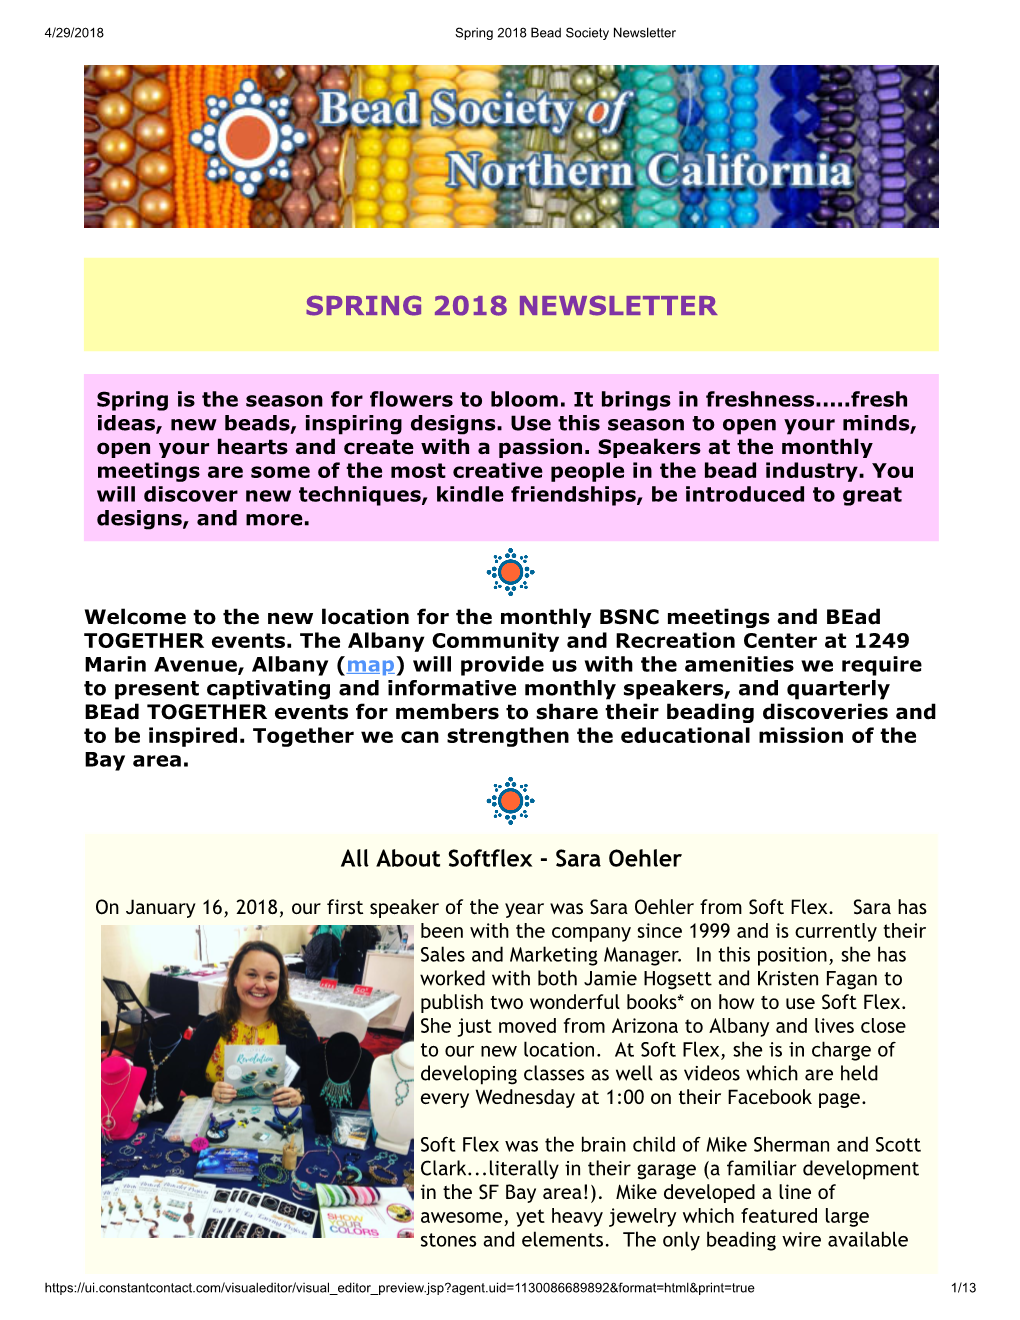 BSNC 2018 Spring Newsletter